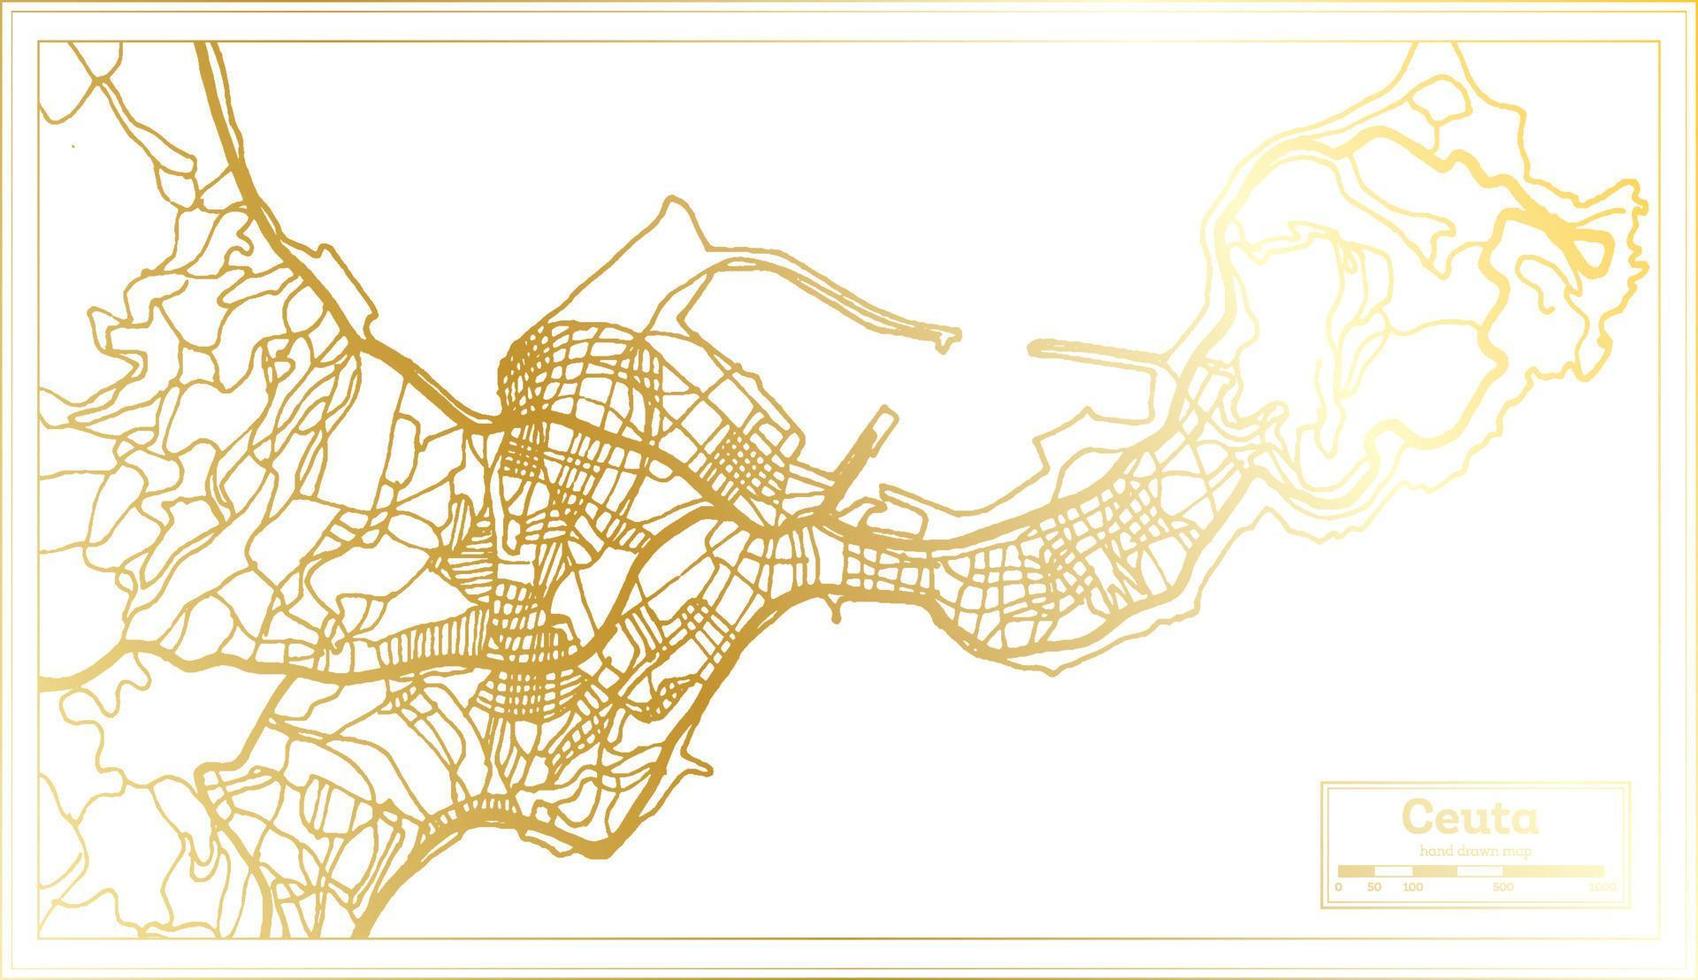 ceuta spanien stadtplan im retro-stil in goldener farbe. Übersichtskarte. vektor